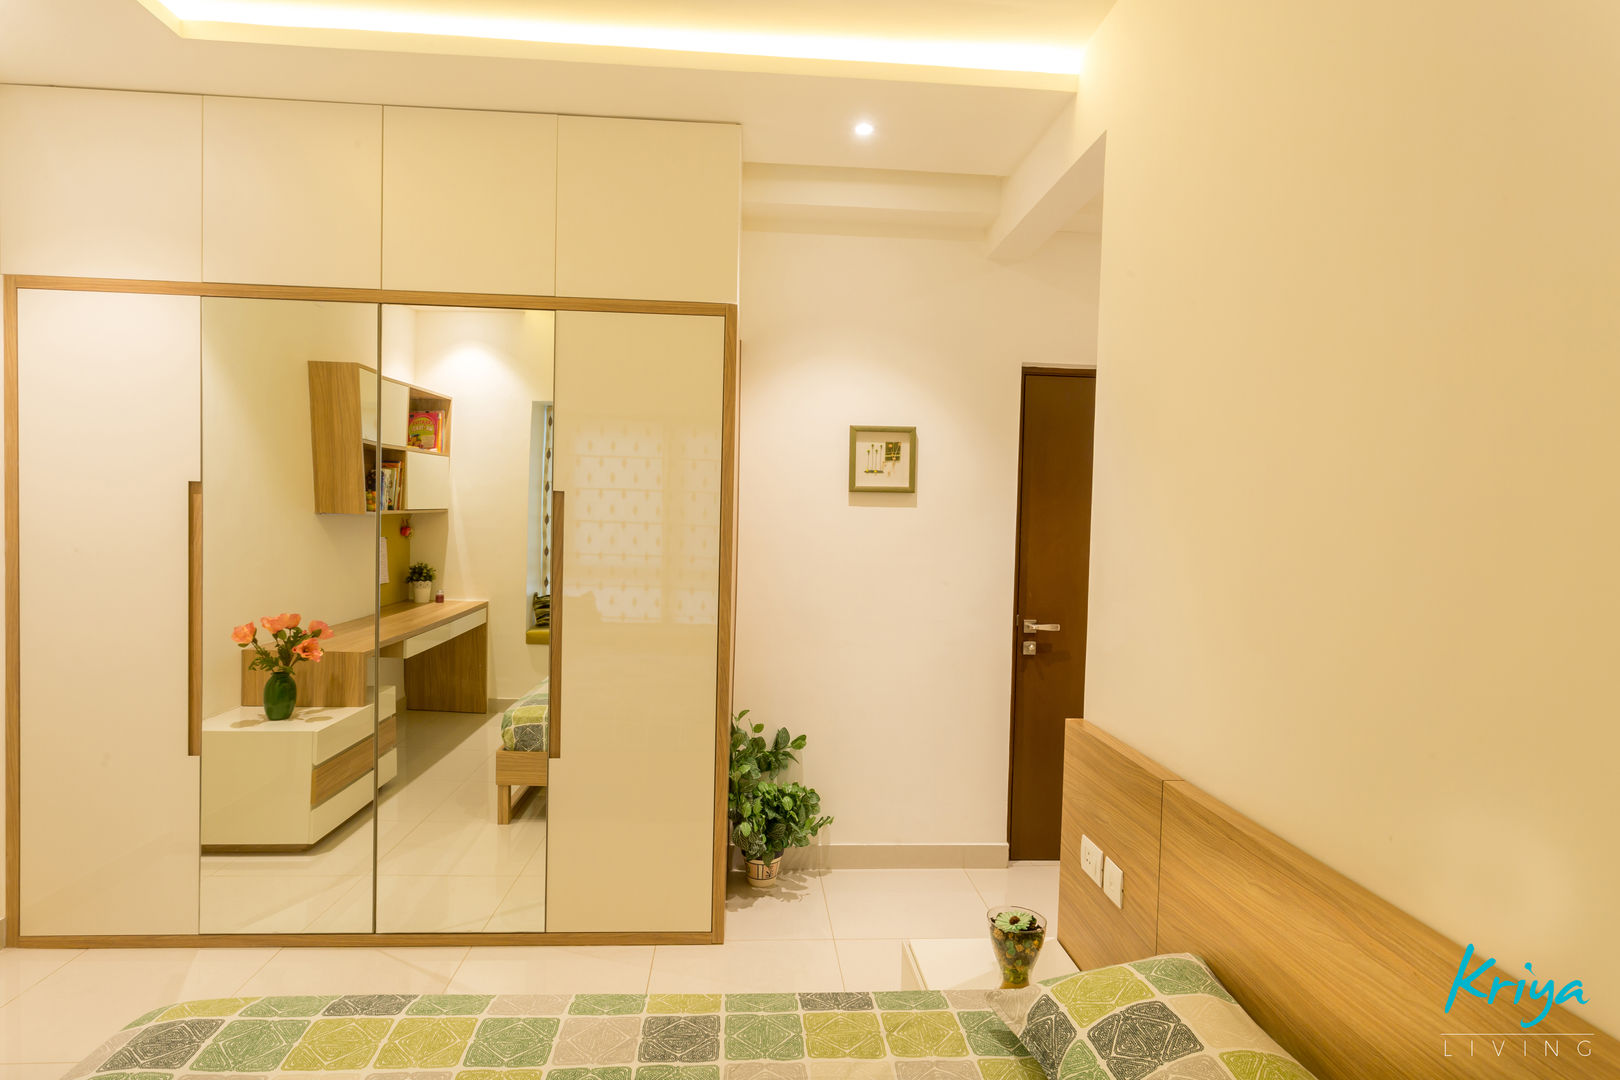 3 BHK apartment - RMZ Galleria, Bengaluru, KRIYA LIVING KRIYA LIVING Quartos modernos